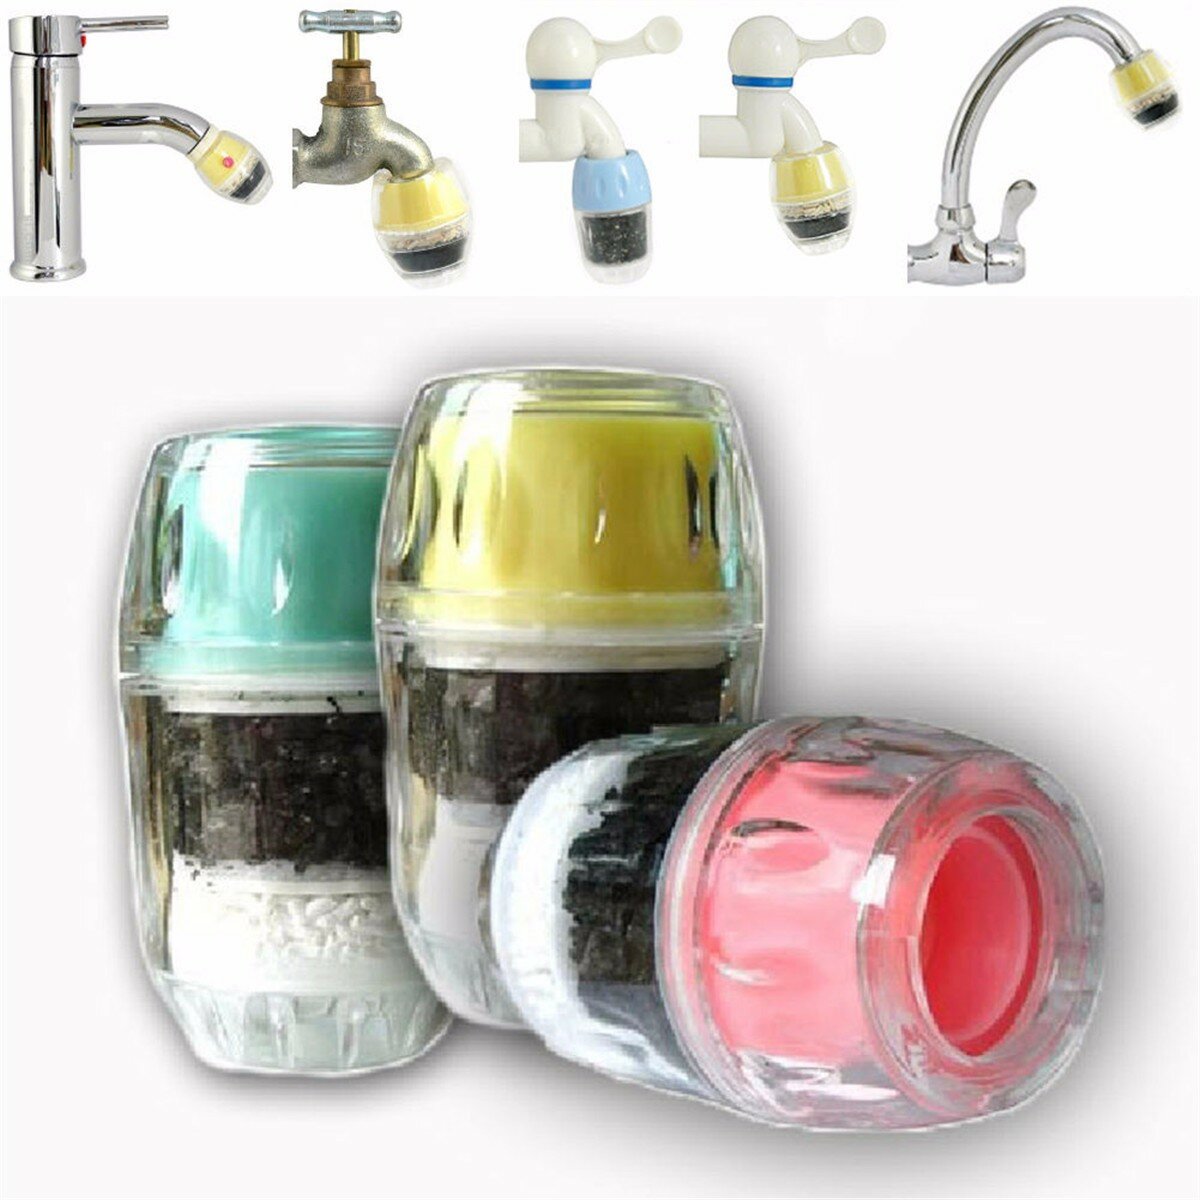 

Carbon Kitchen Home Faucet Tap Water Clean Purifier Filter Cartridge